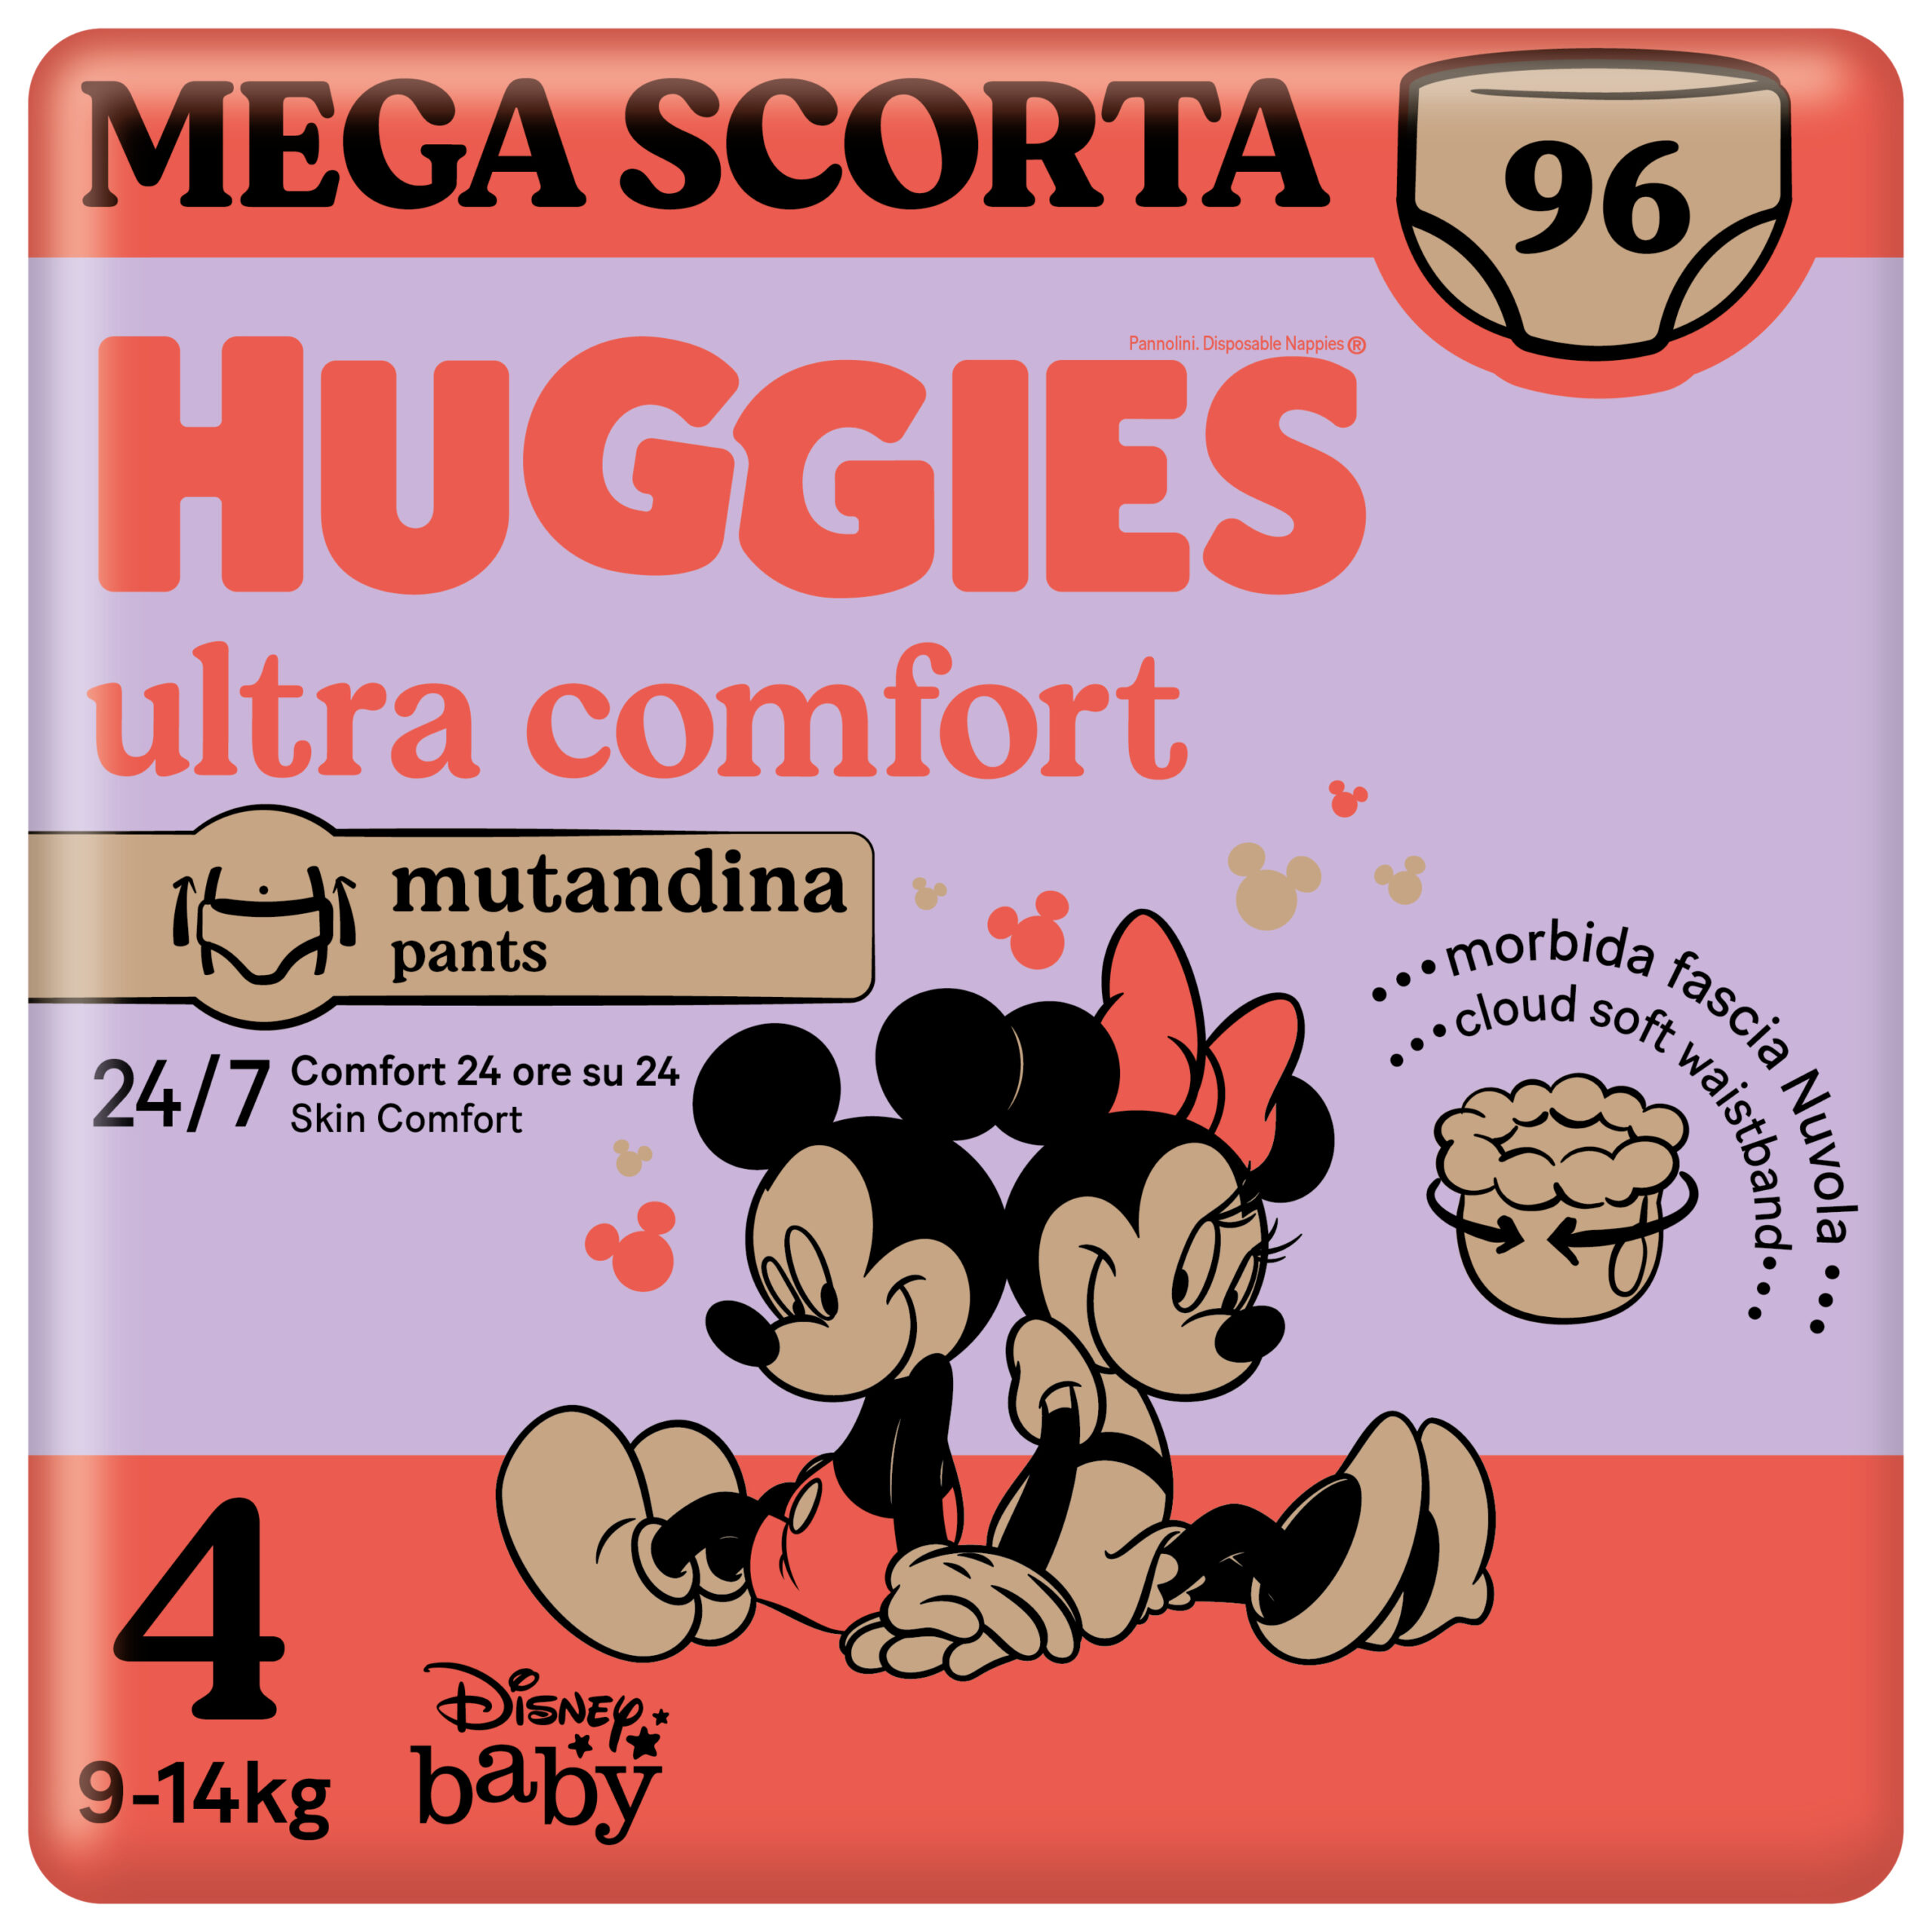 Huggies ultra comfort mutandina megapack tg.4 - 96 pezzi - Huggies